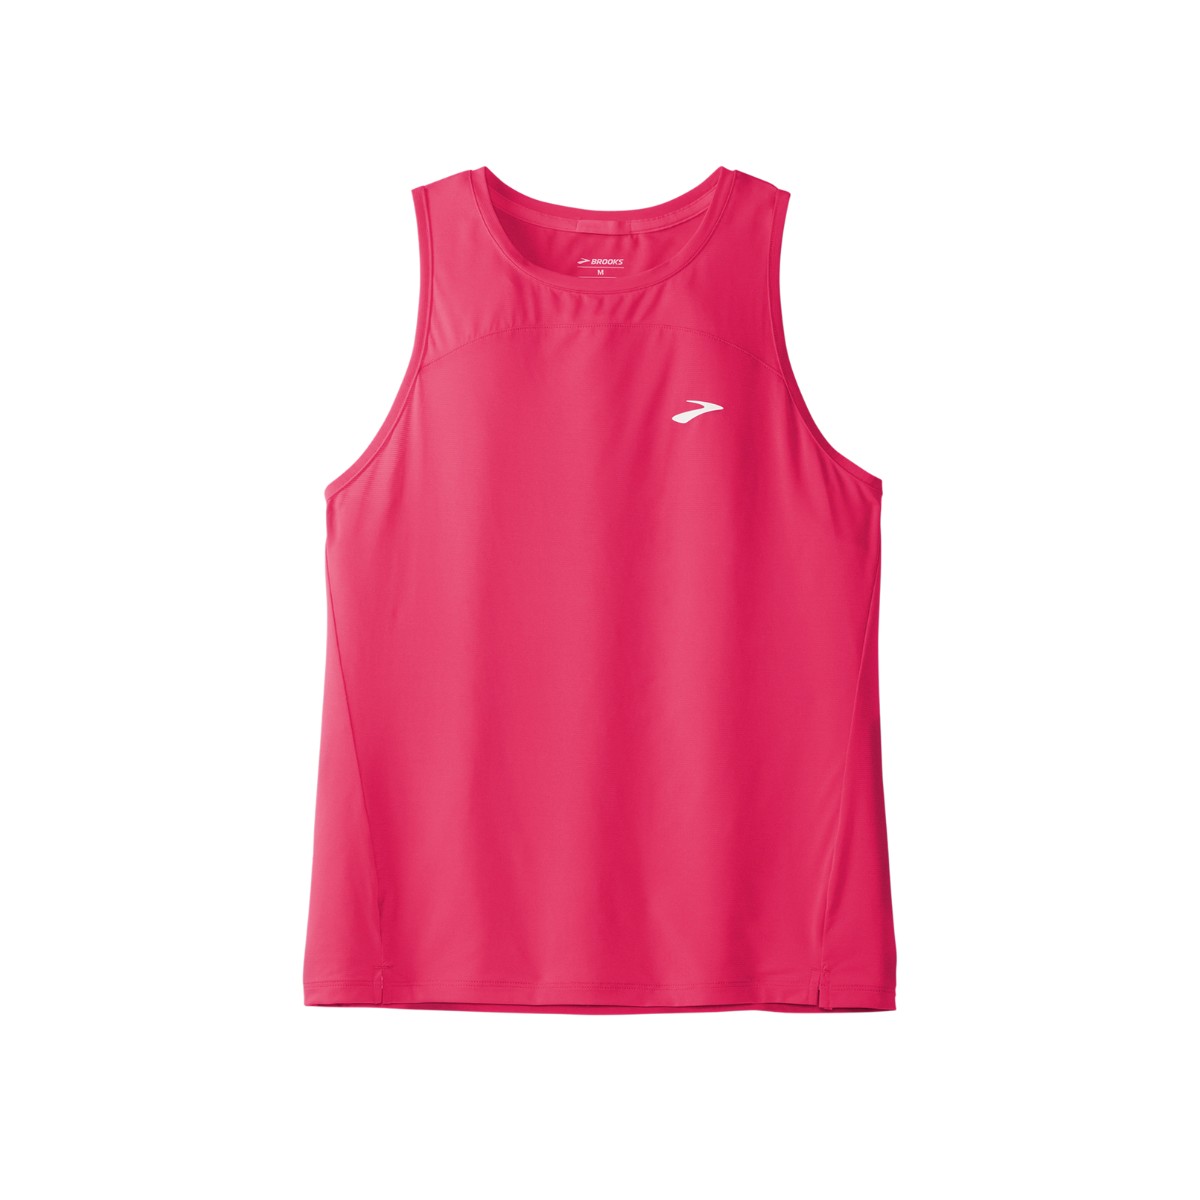 t-shirt brooks sprint free 2.0 sans manches rose femmes, taille m